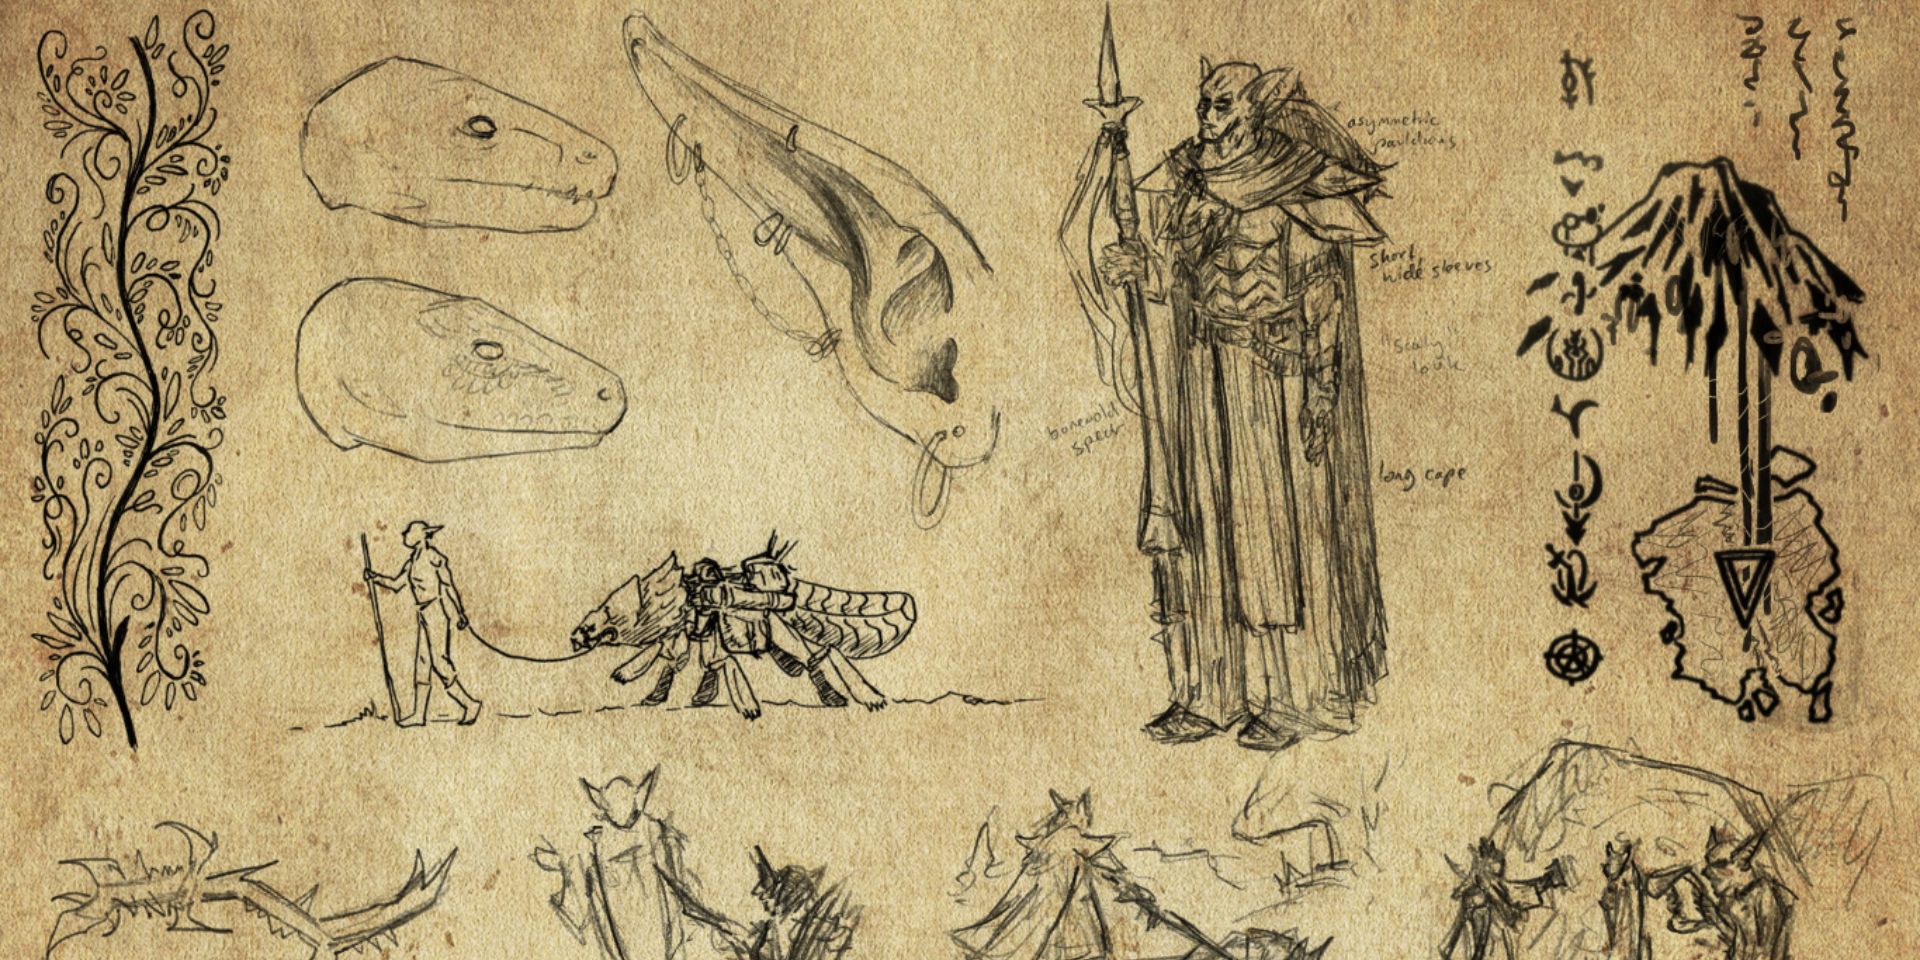 Elder Scrolls III Morrowind Concept Sketch